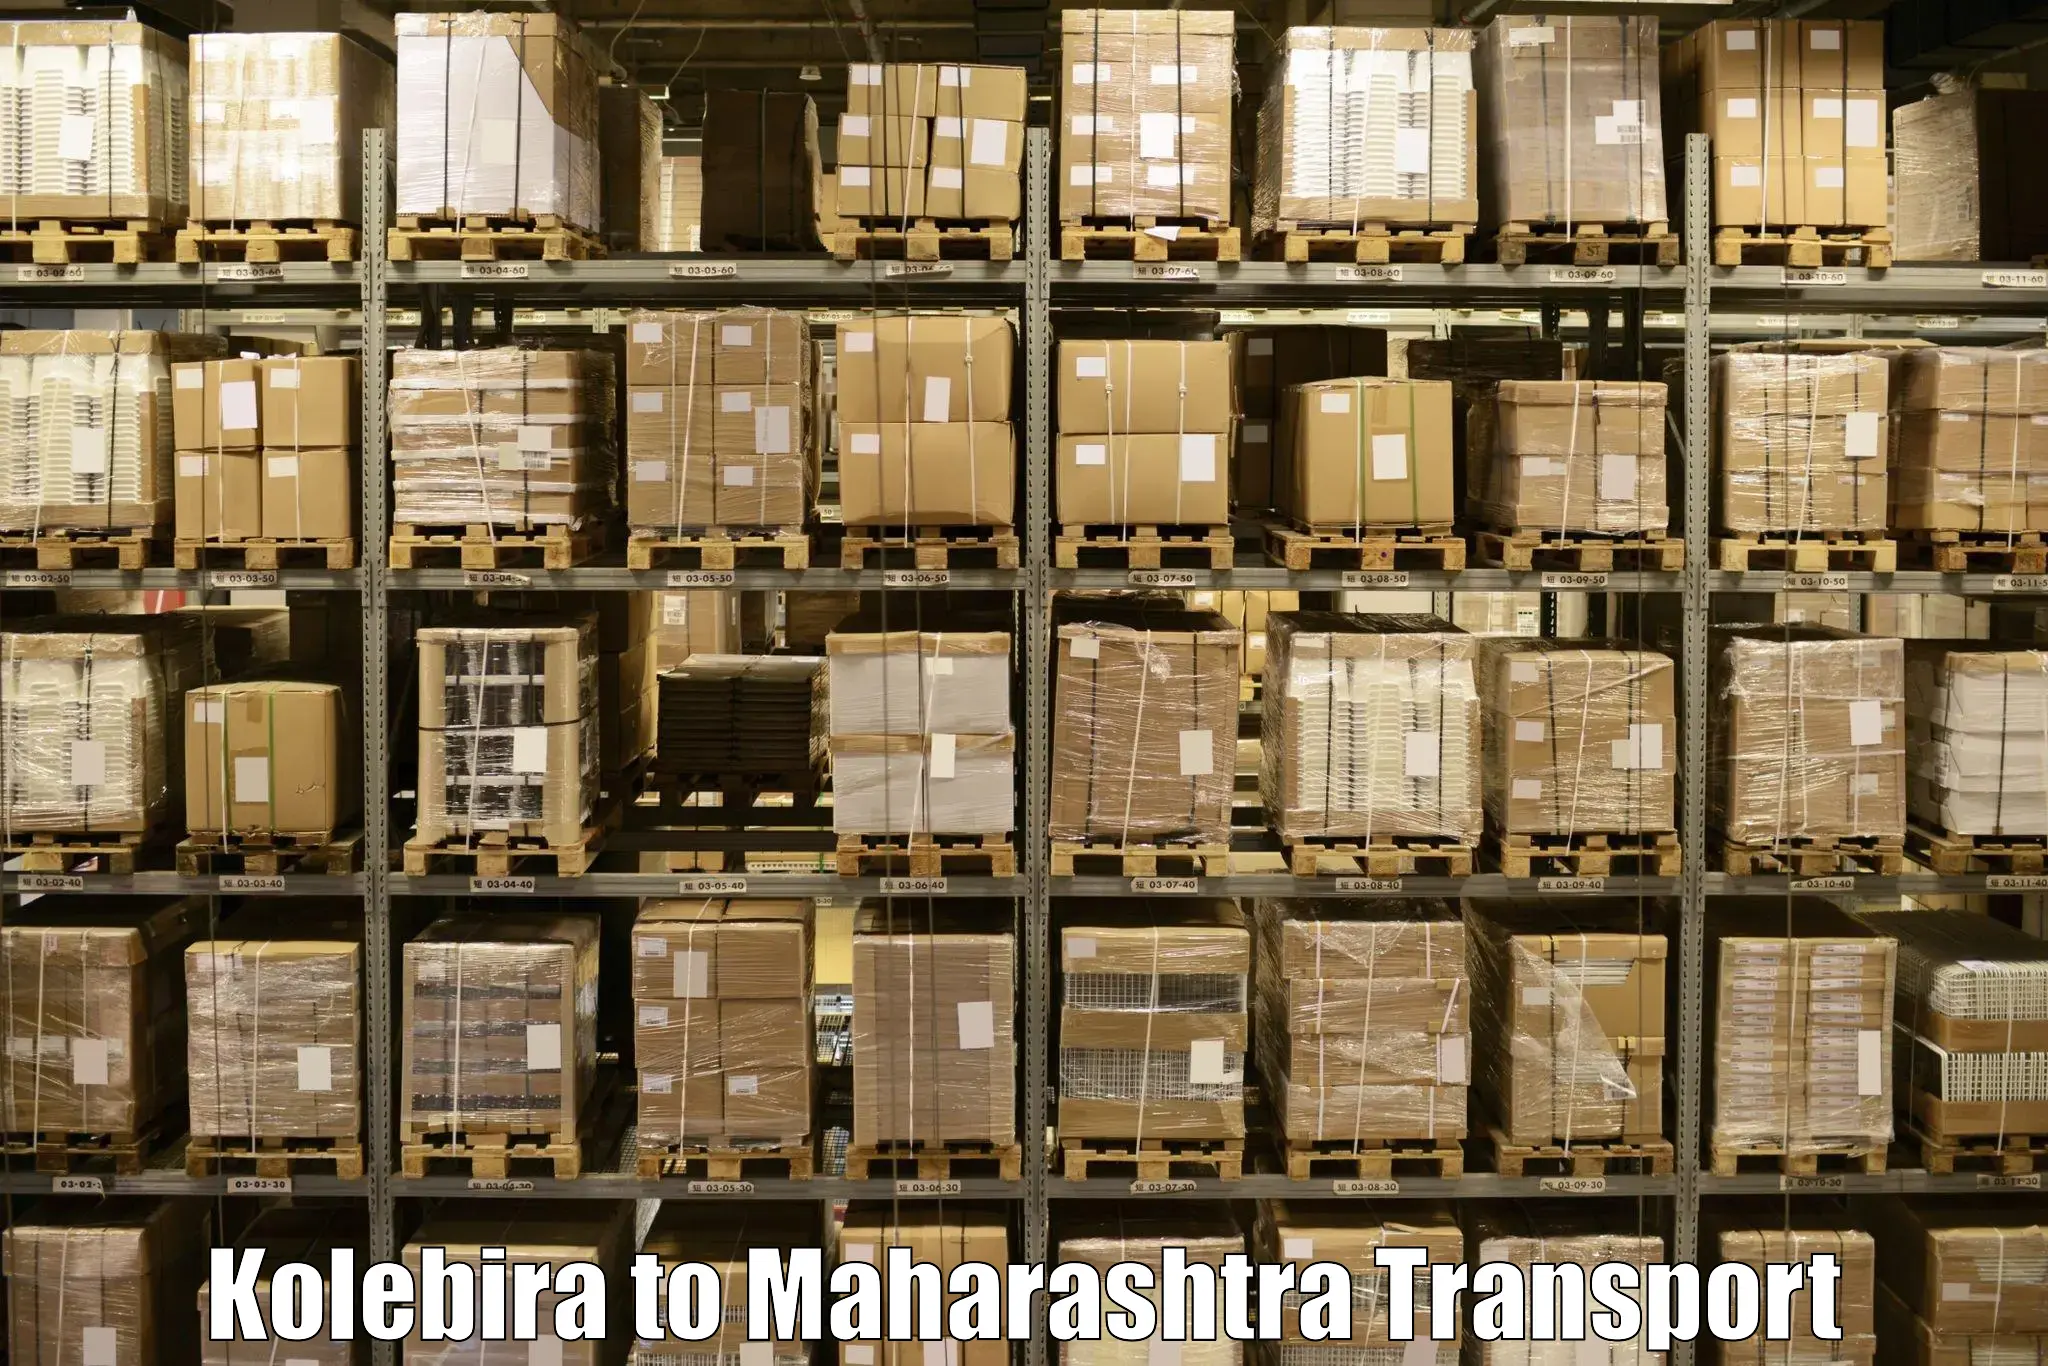 Truck transport companies in India Kolebira to Thane